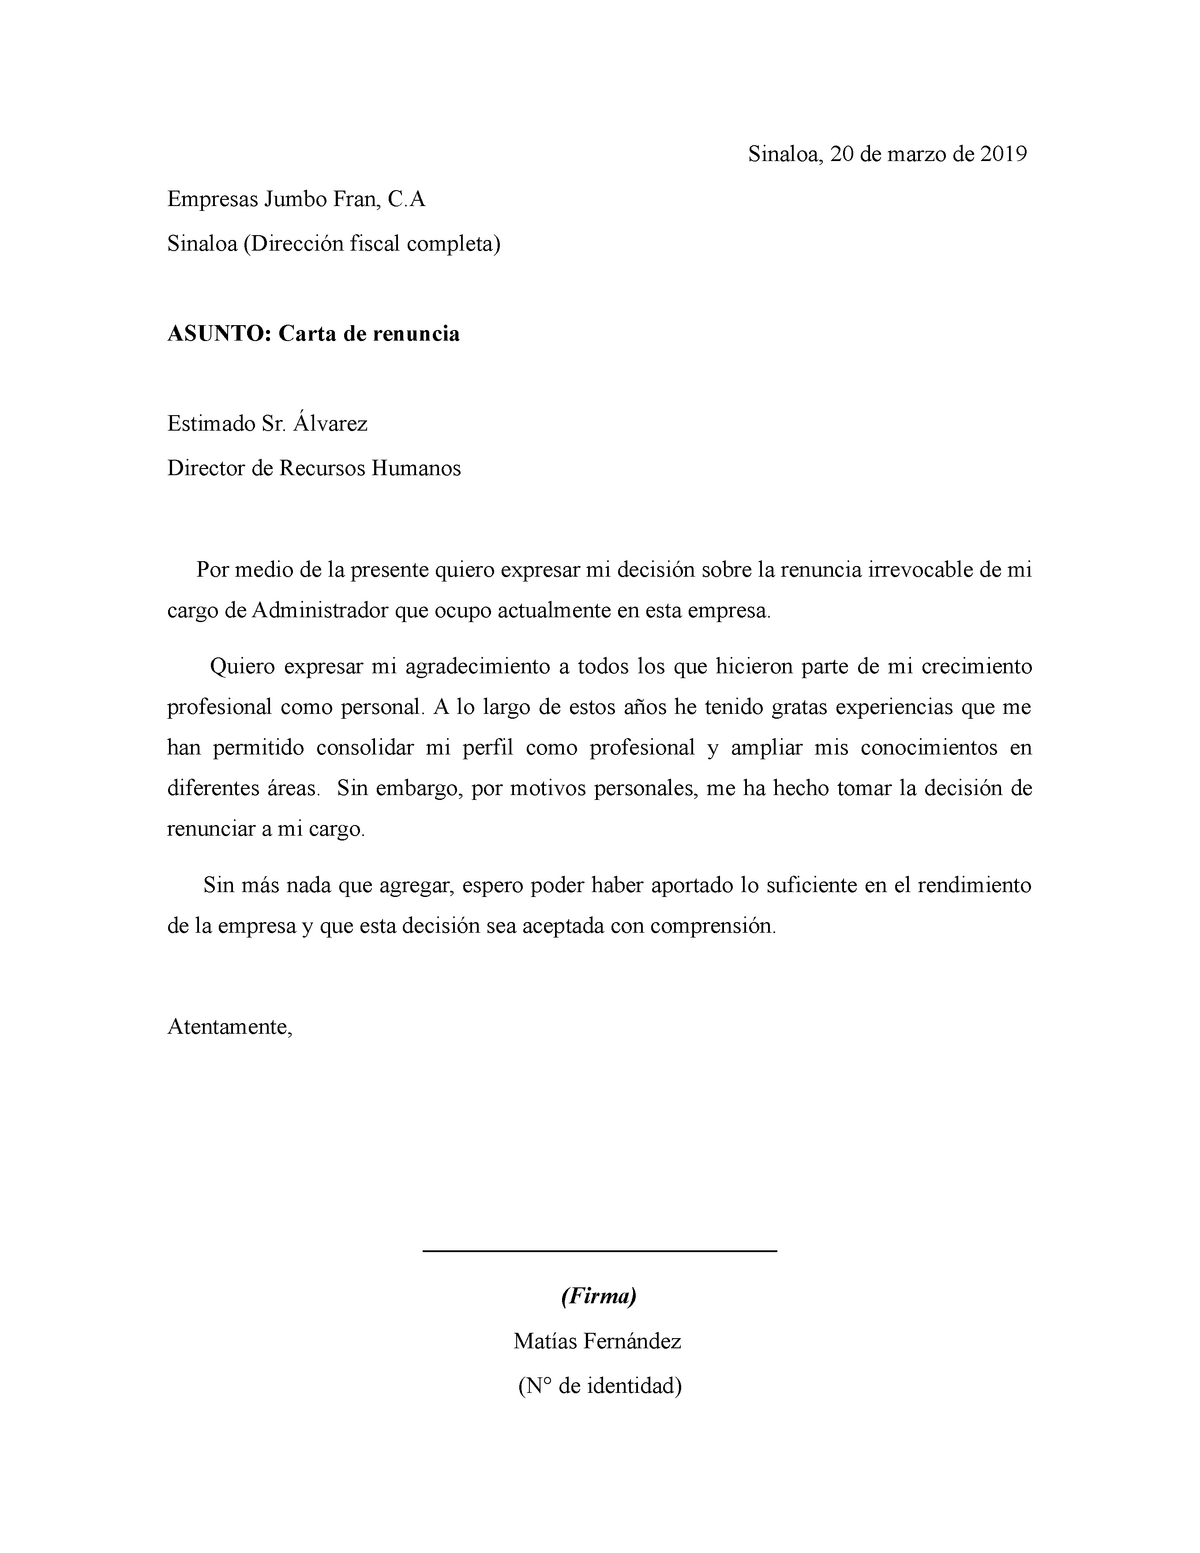 Ejemplo de una carta de renuncia voluntaria - Sinaloa, 20 de marzo de 2019  Empresas Jumbo Fran, C - Studocu